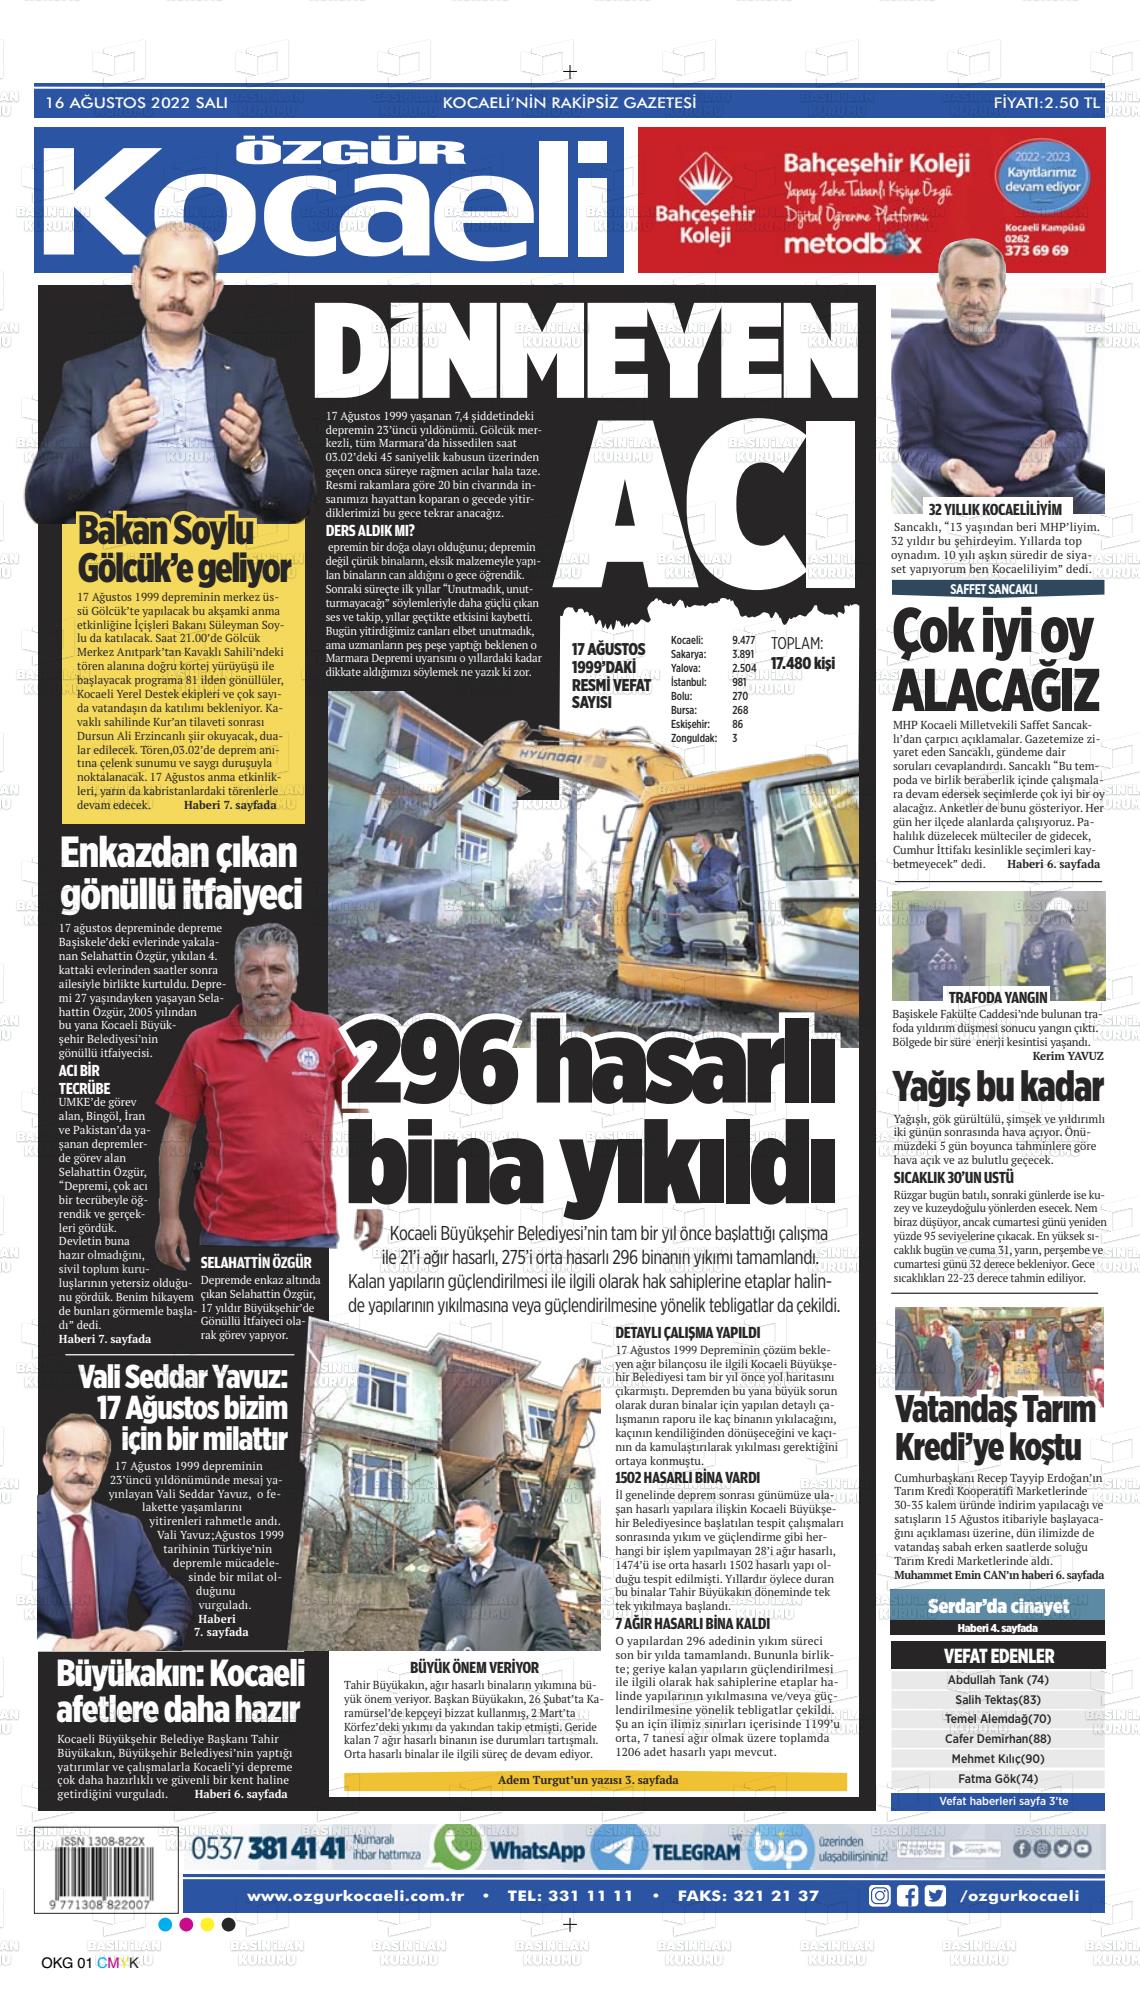 16 Ağustos 2022 Özgür Kocaeli Gazete Manşeti